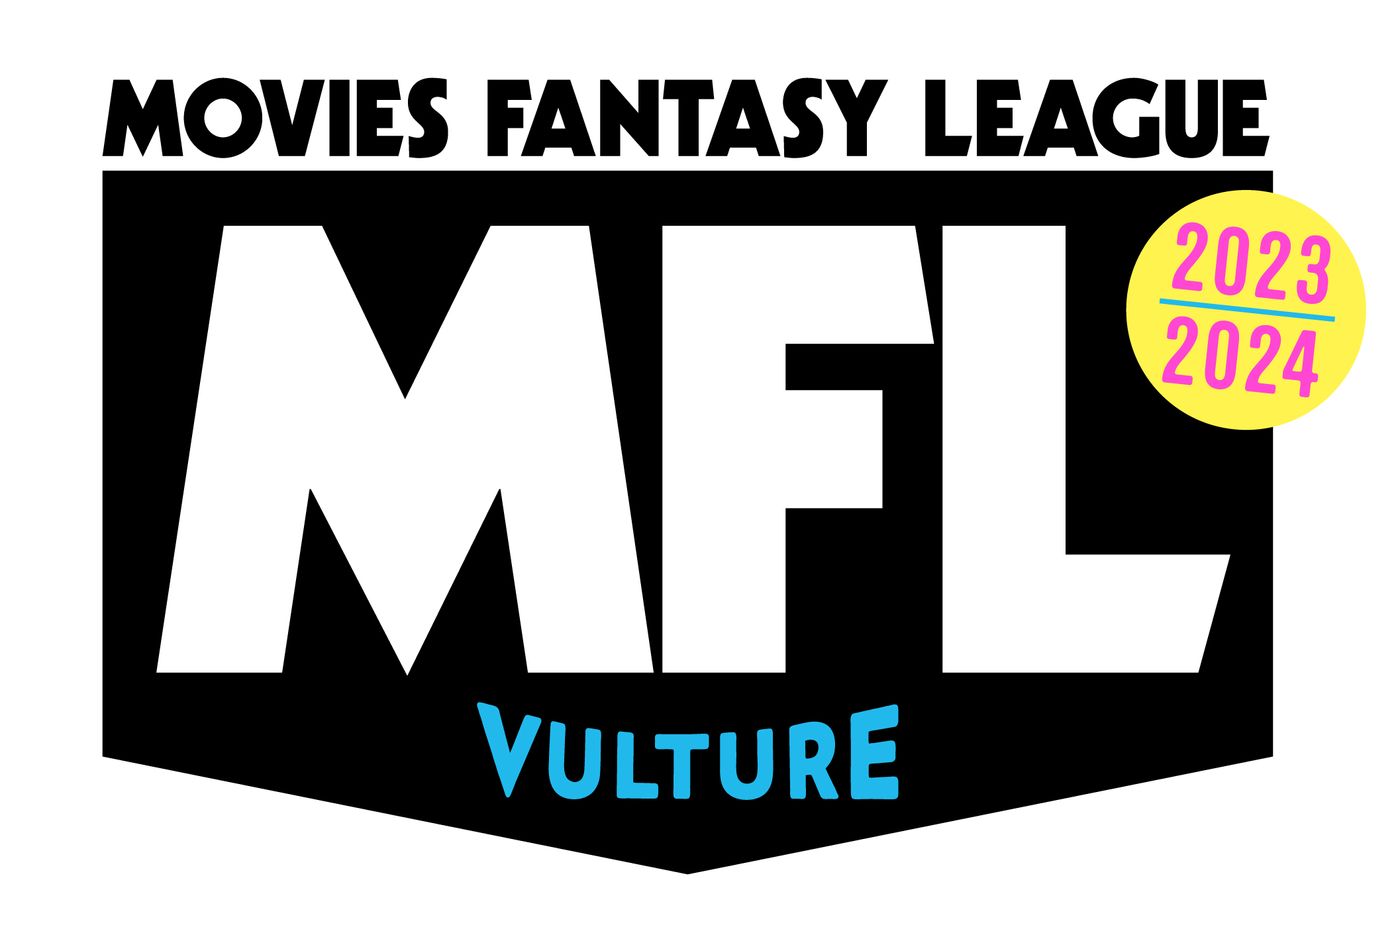 Vulture Movies Fantasy League